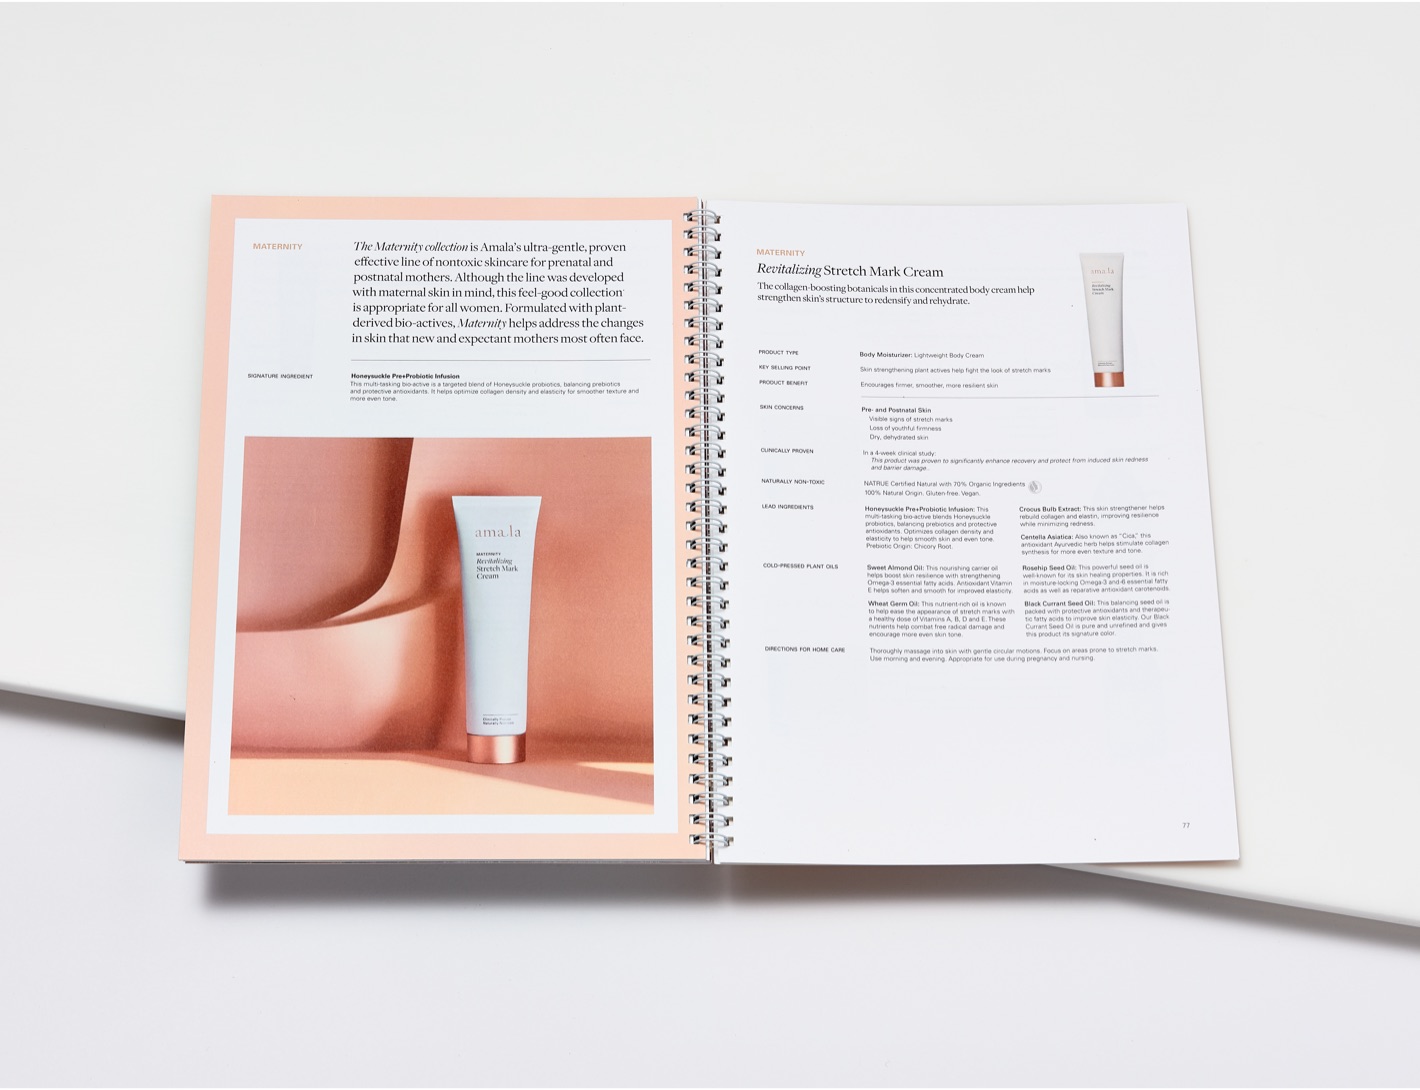 Amala training manual spread featuring Revitalizing Stretch Mark Cream